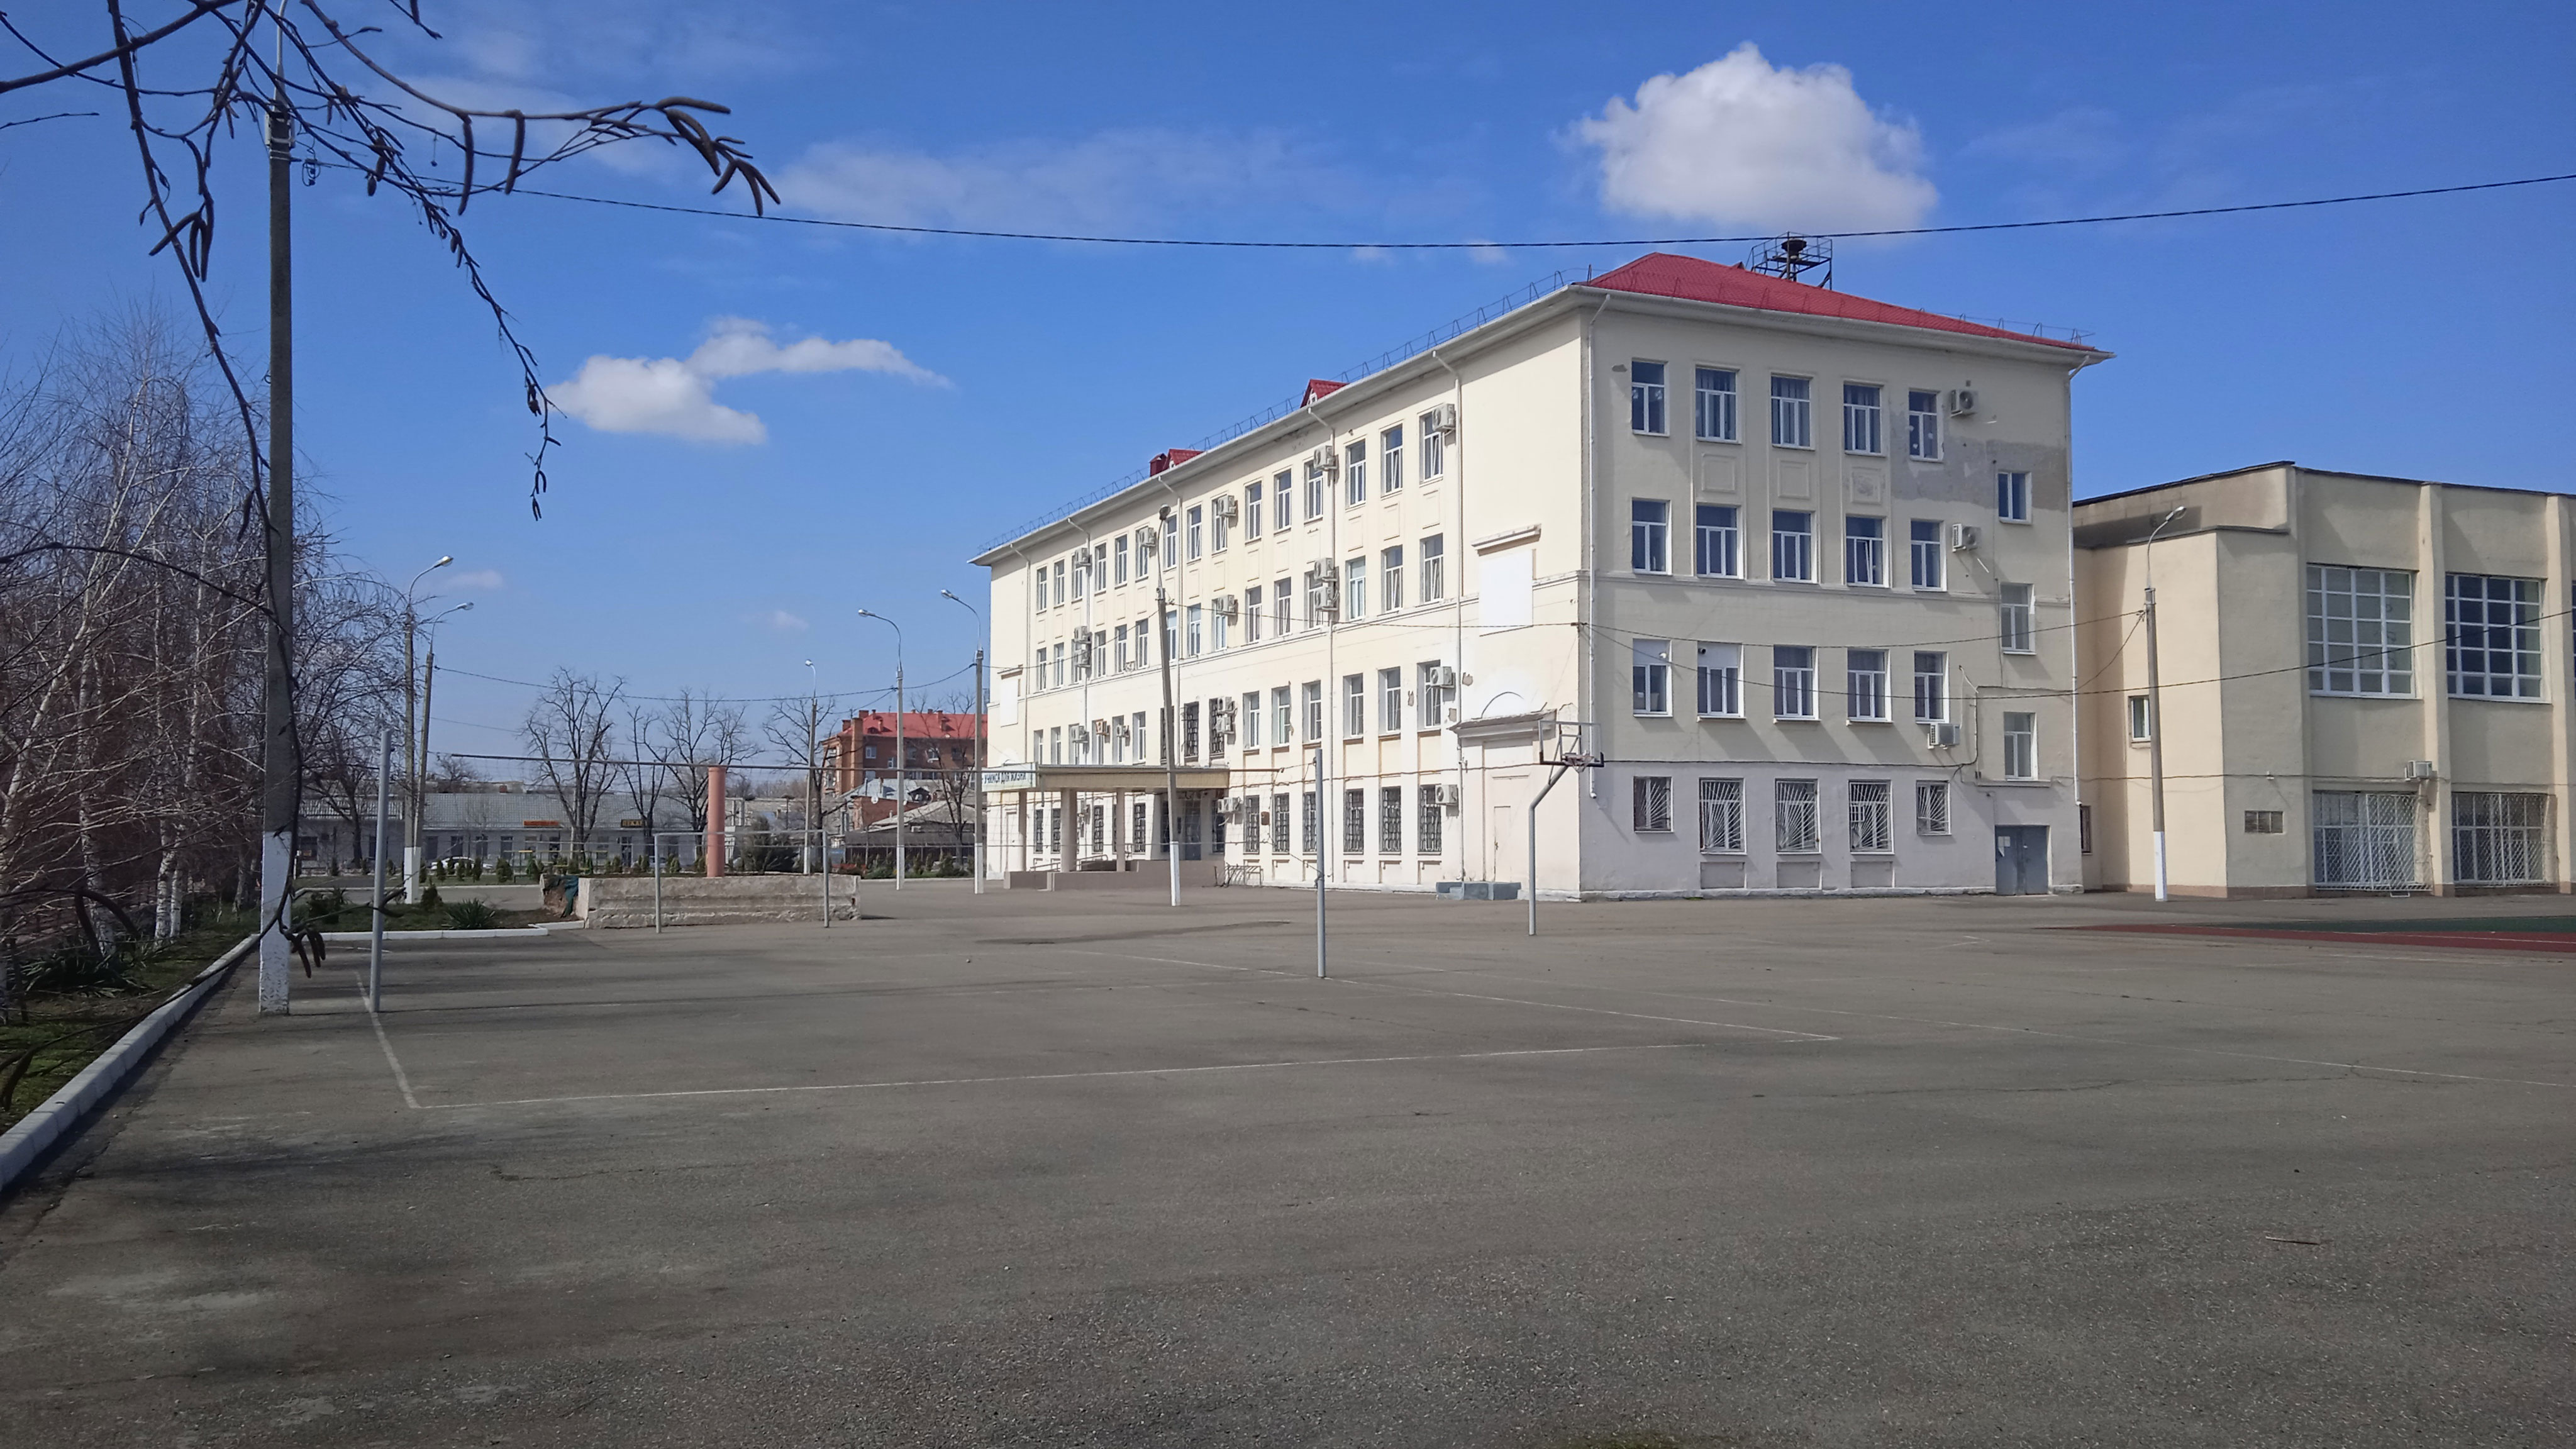 Общий вид здания 35 школы г. Краснодар.